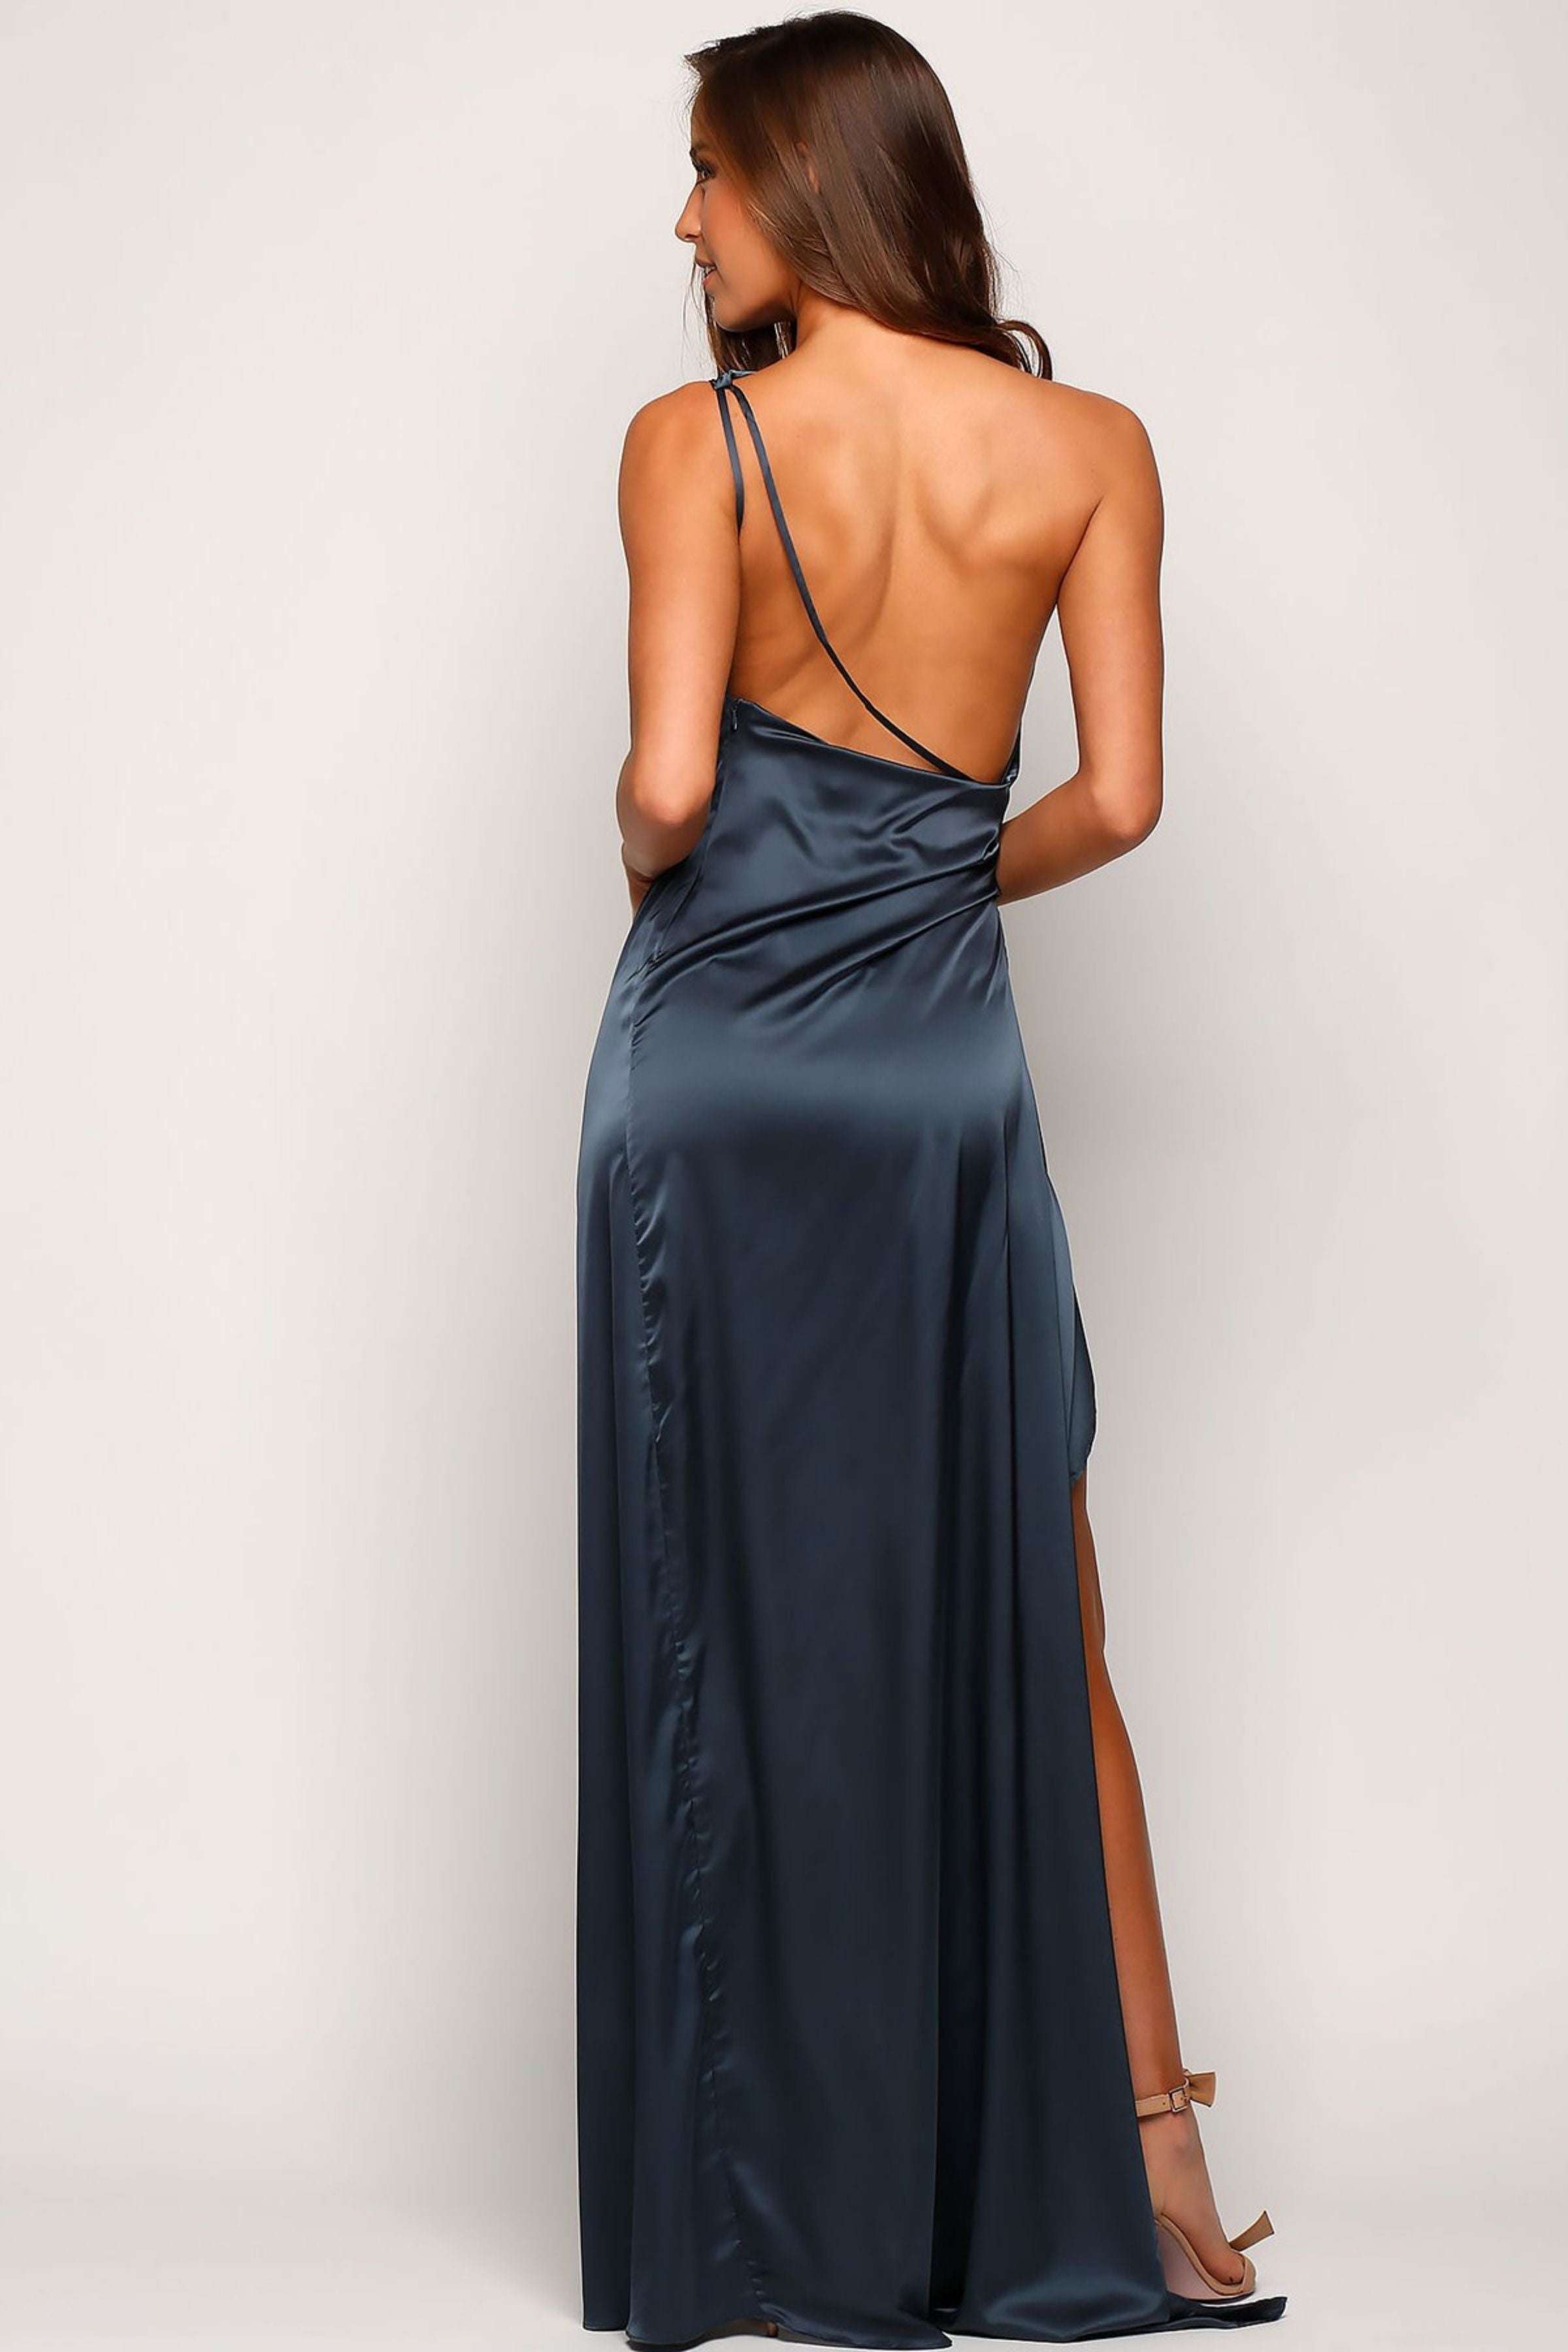 Lexi LEXI Samira Dress (Orion Blue) - RRP $379 - lexi-samira-dress-orion-blue---rrp-9-dress-for-a-night-30754881.jpg